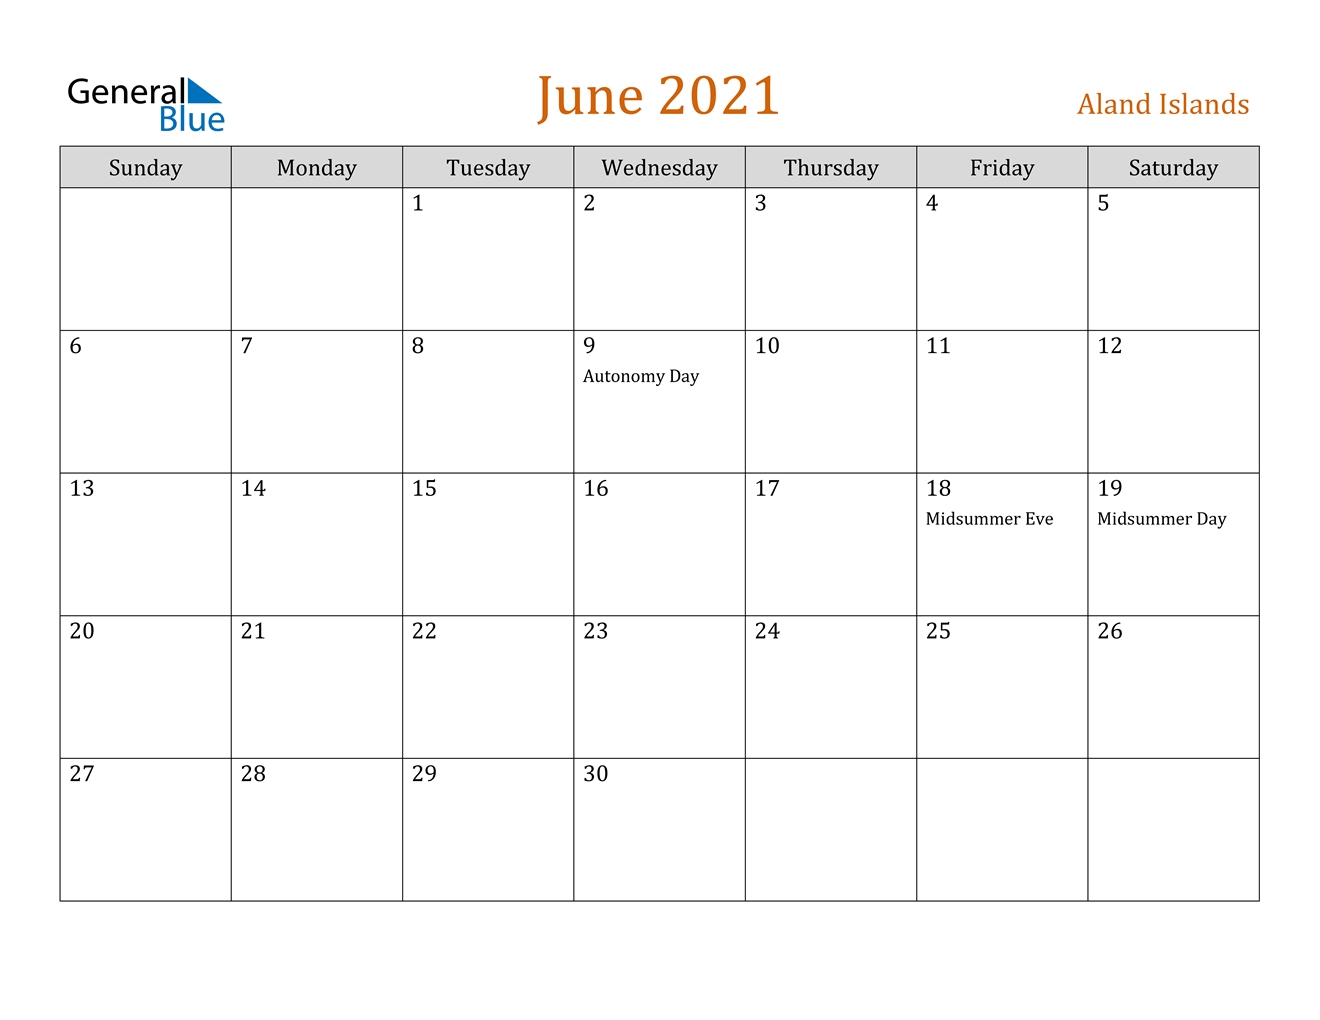 June 2021 Calendar - Aland Islands